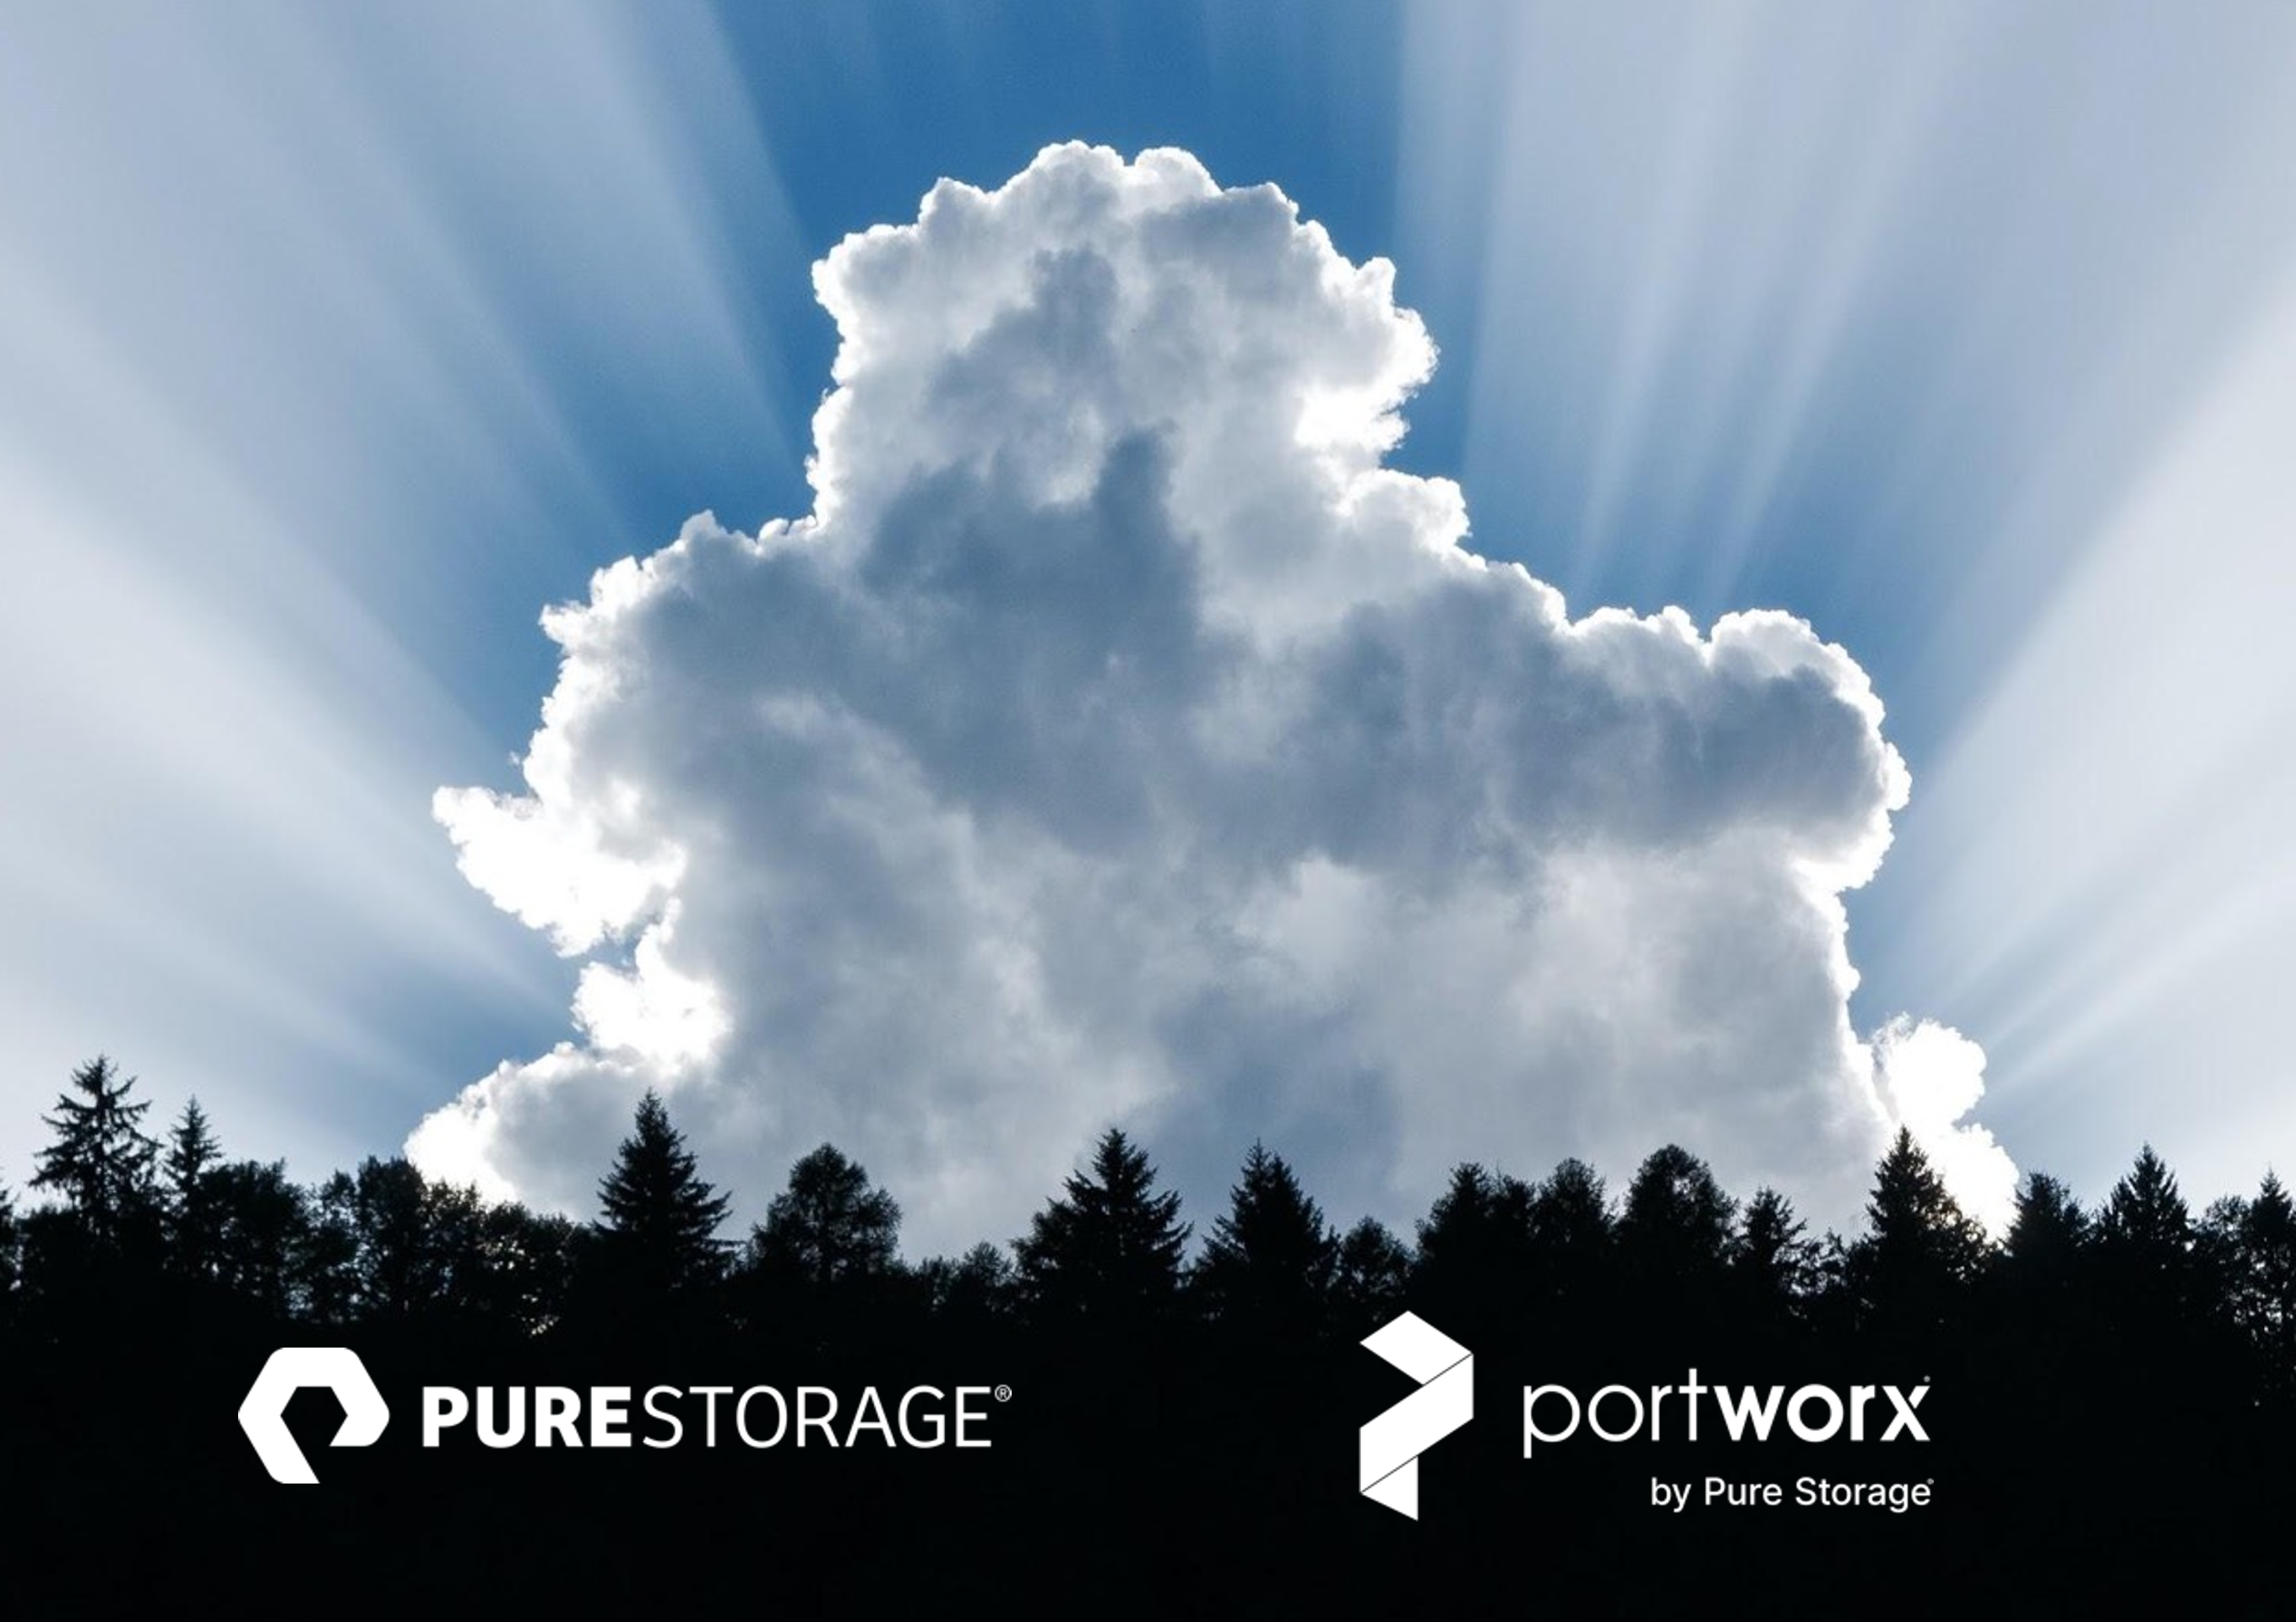 Portworx Enterprise 2 8 ピュア ストレージと Portworx の製品ライン 初の統合版 Pure Storage Blog